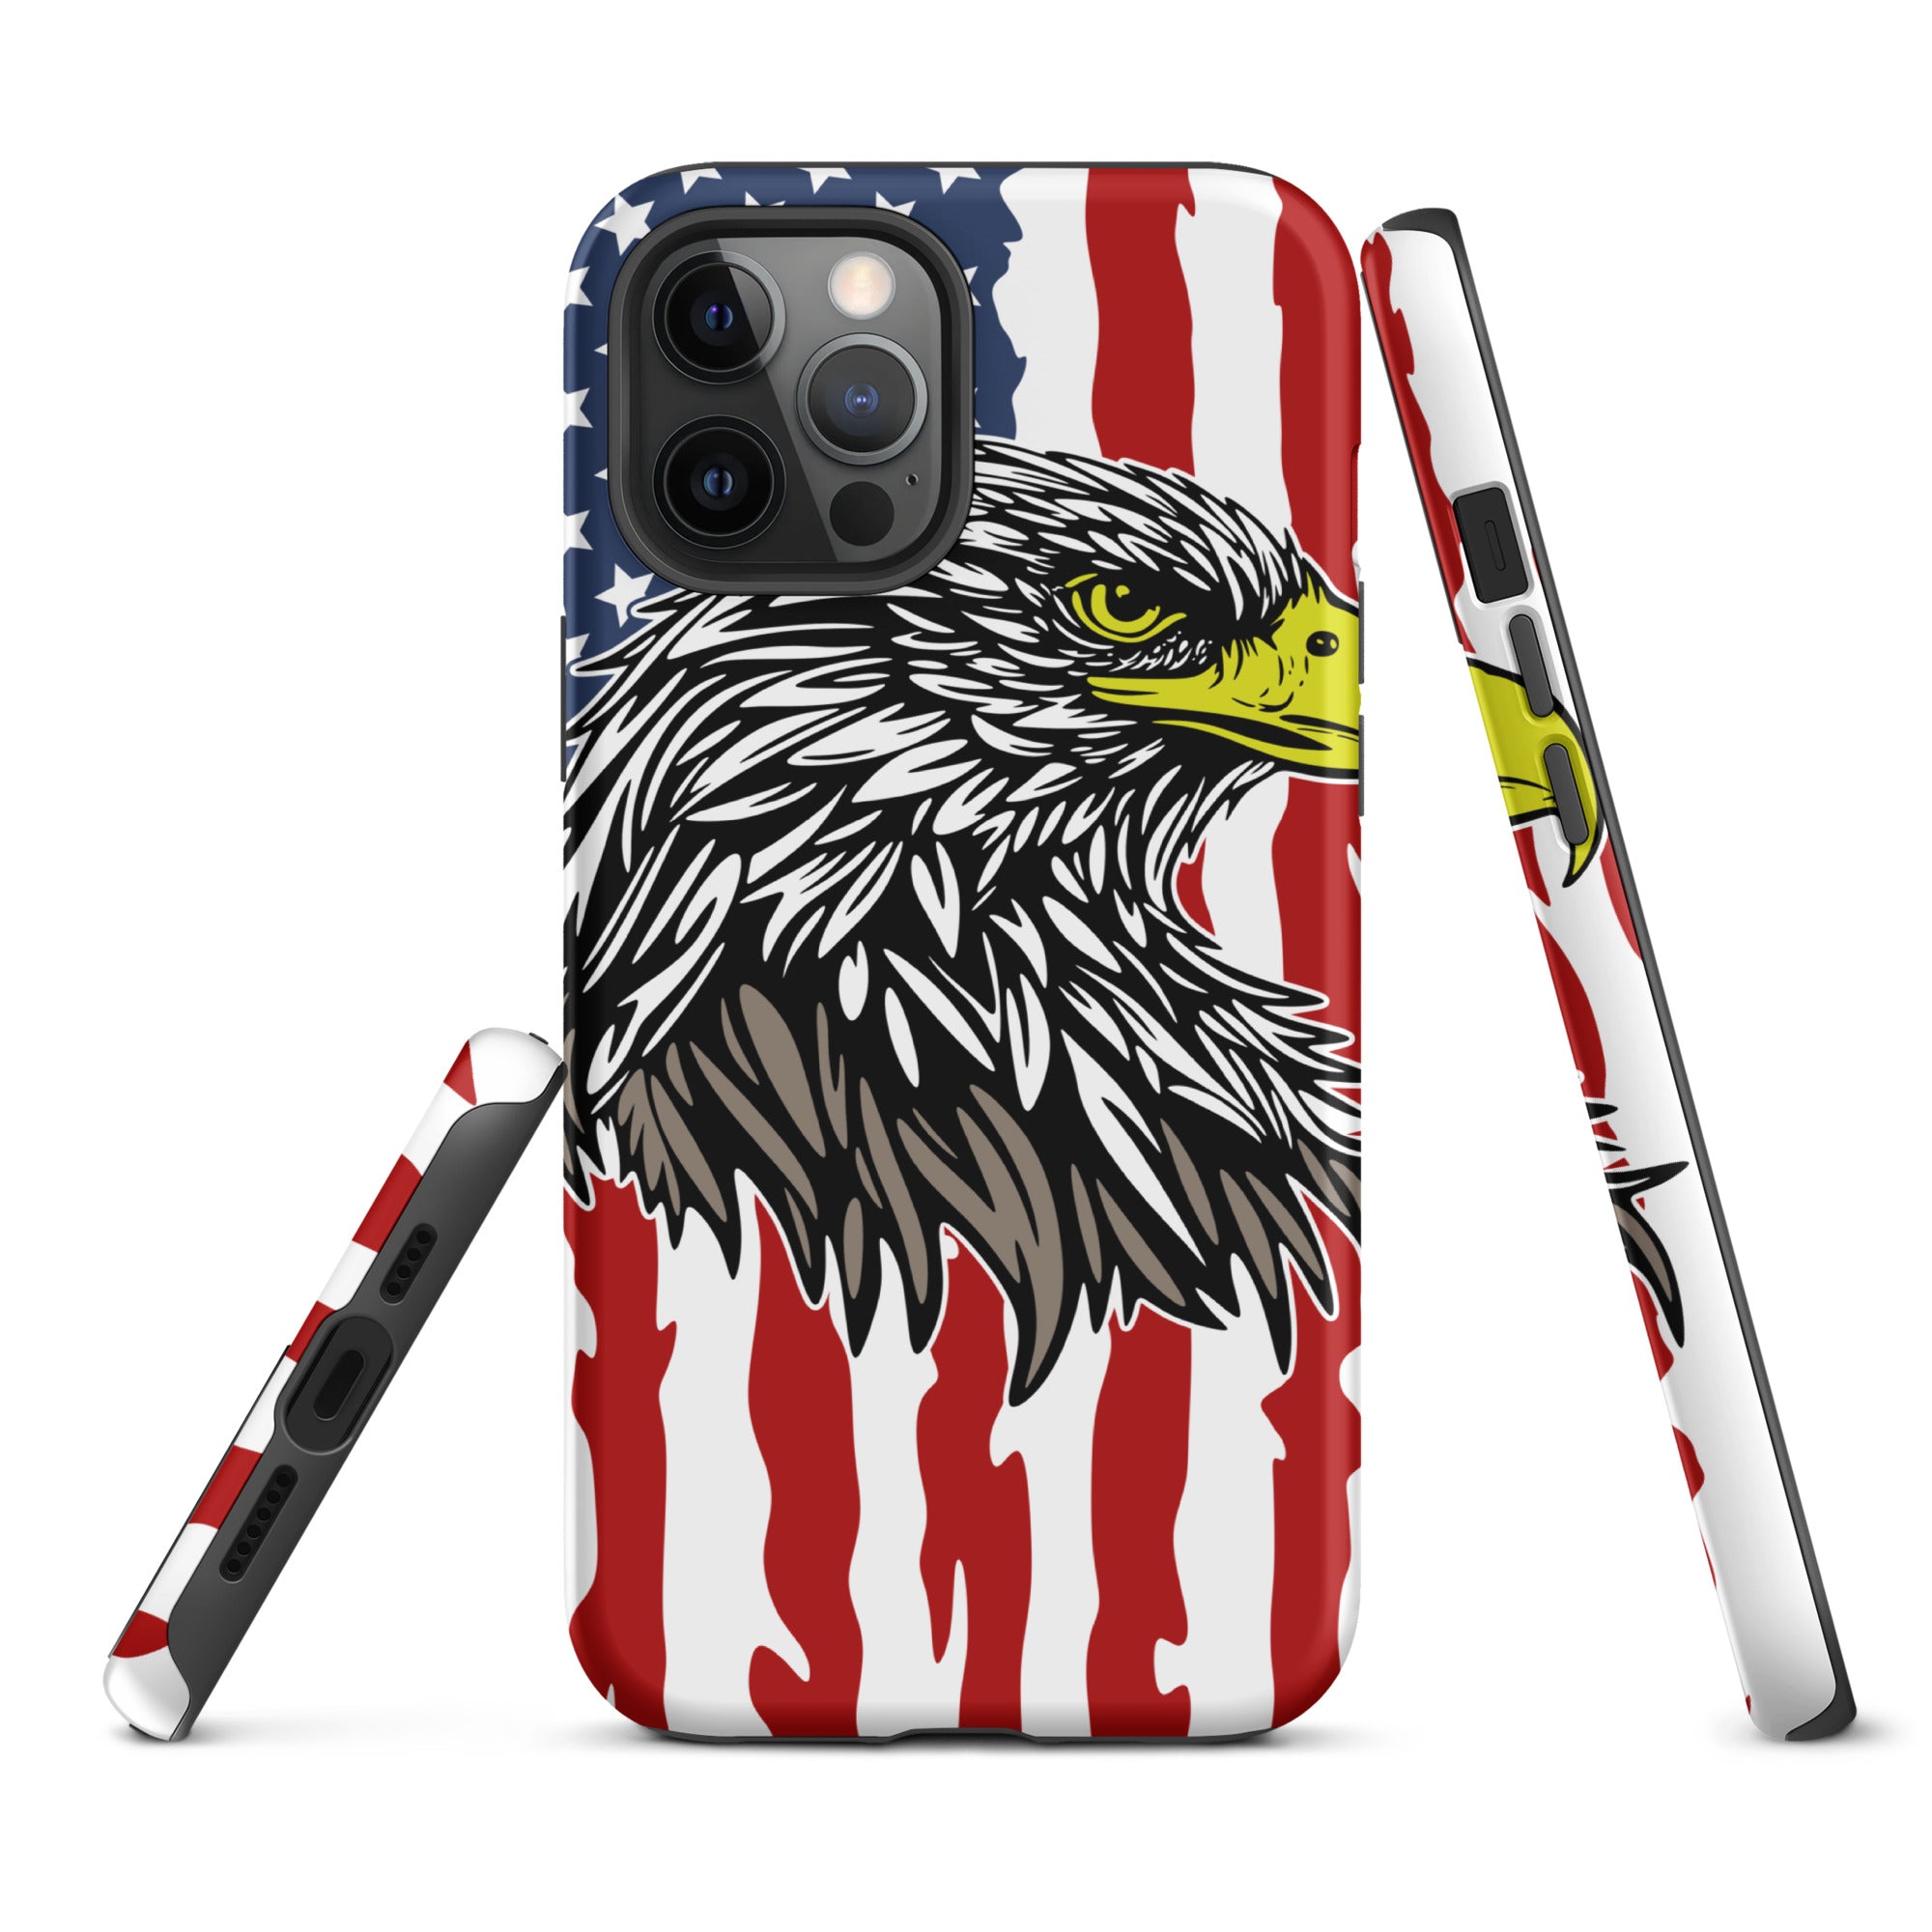 Tough Case for iPhone®- Eagle